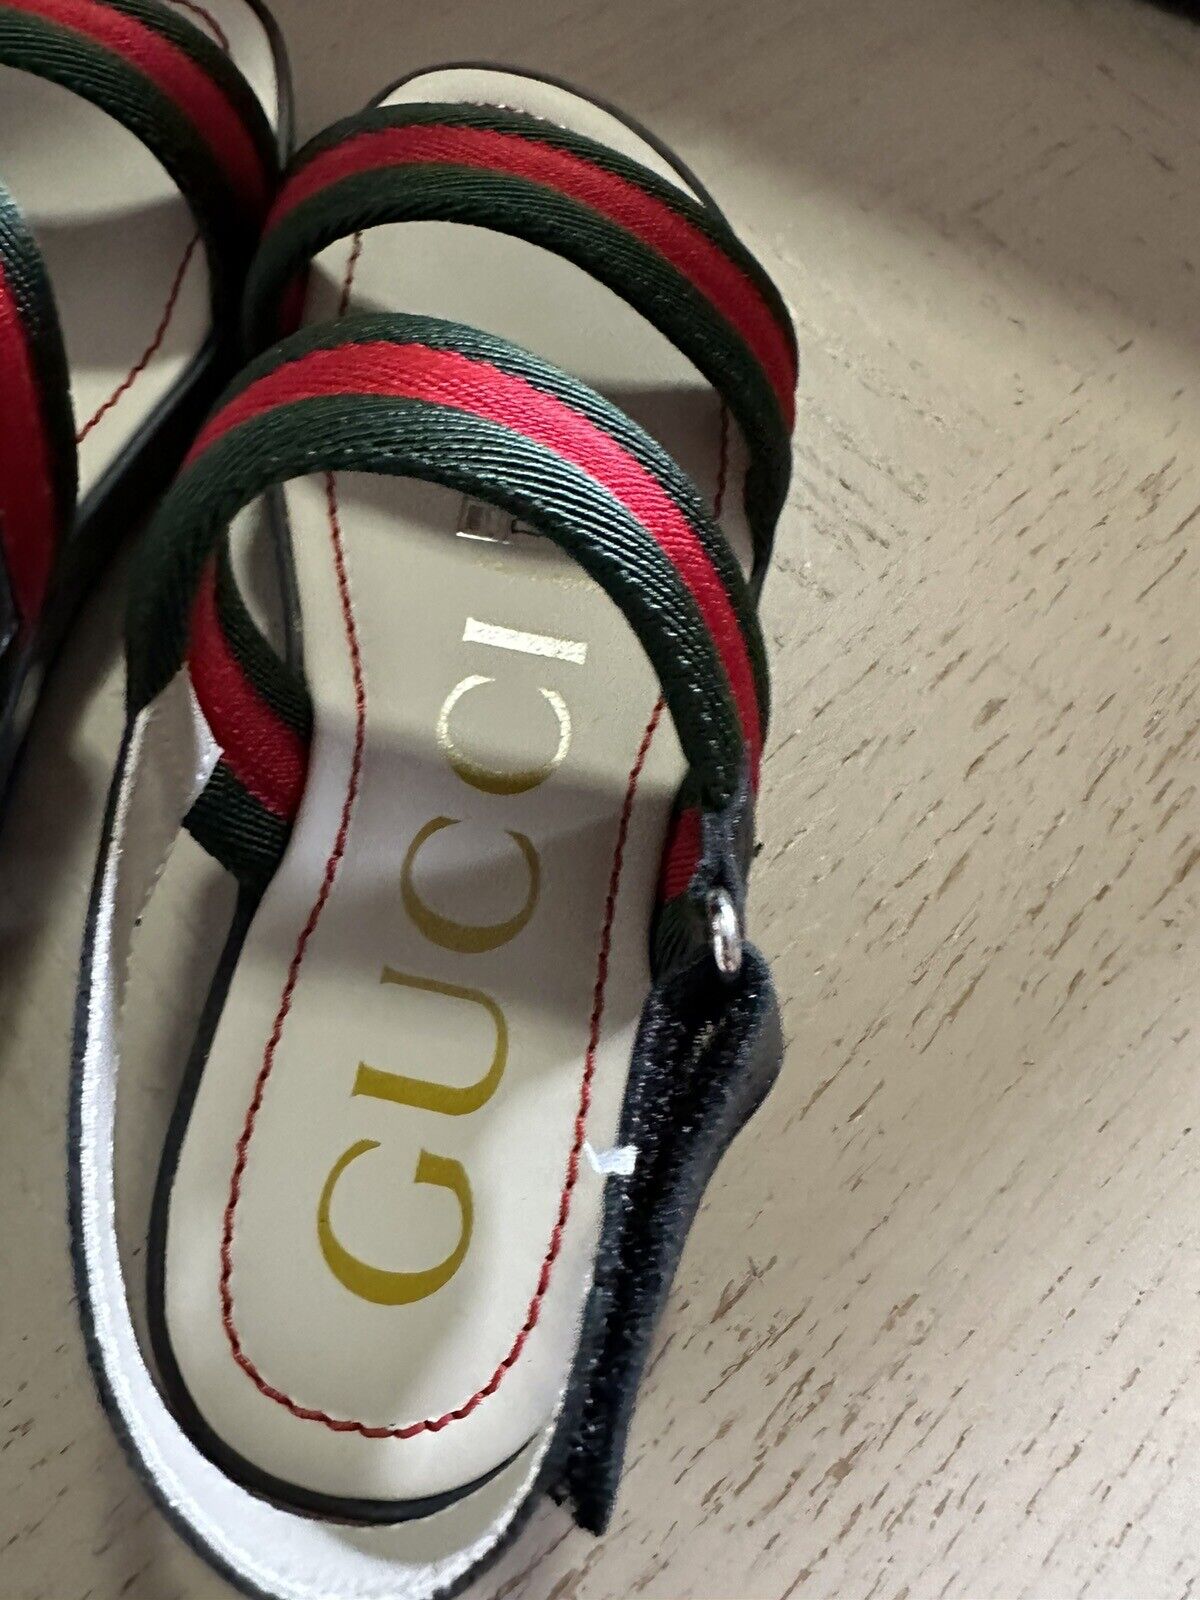 NIB Gucci Kids Sandal Shoes Green/Red Size 31 Gucci 501060